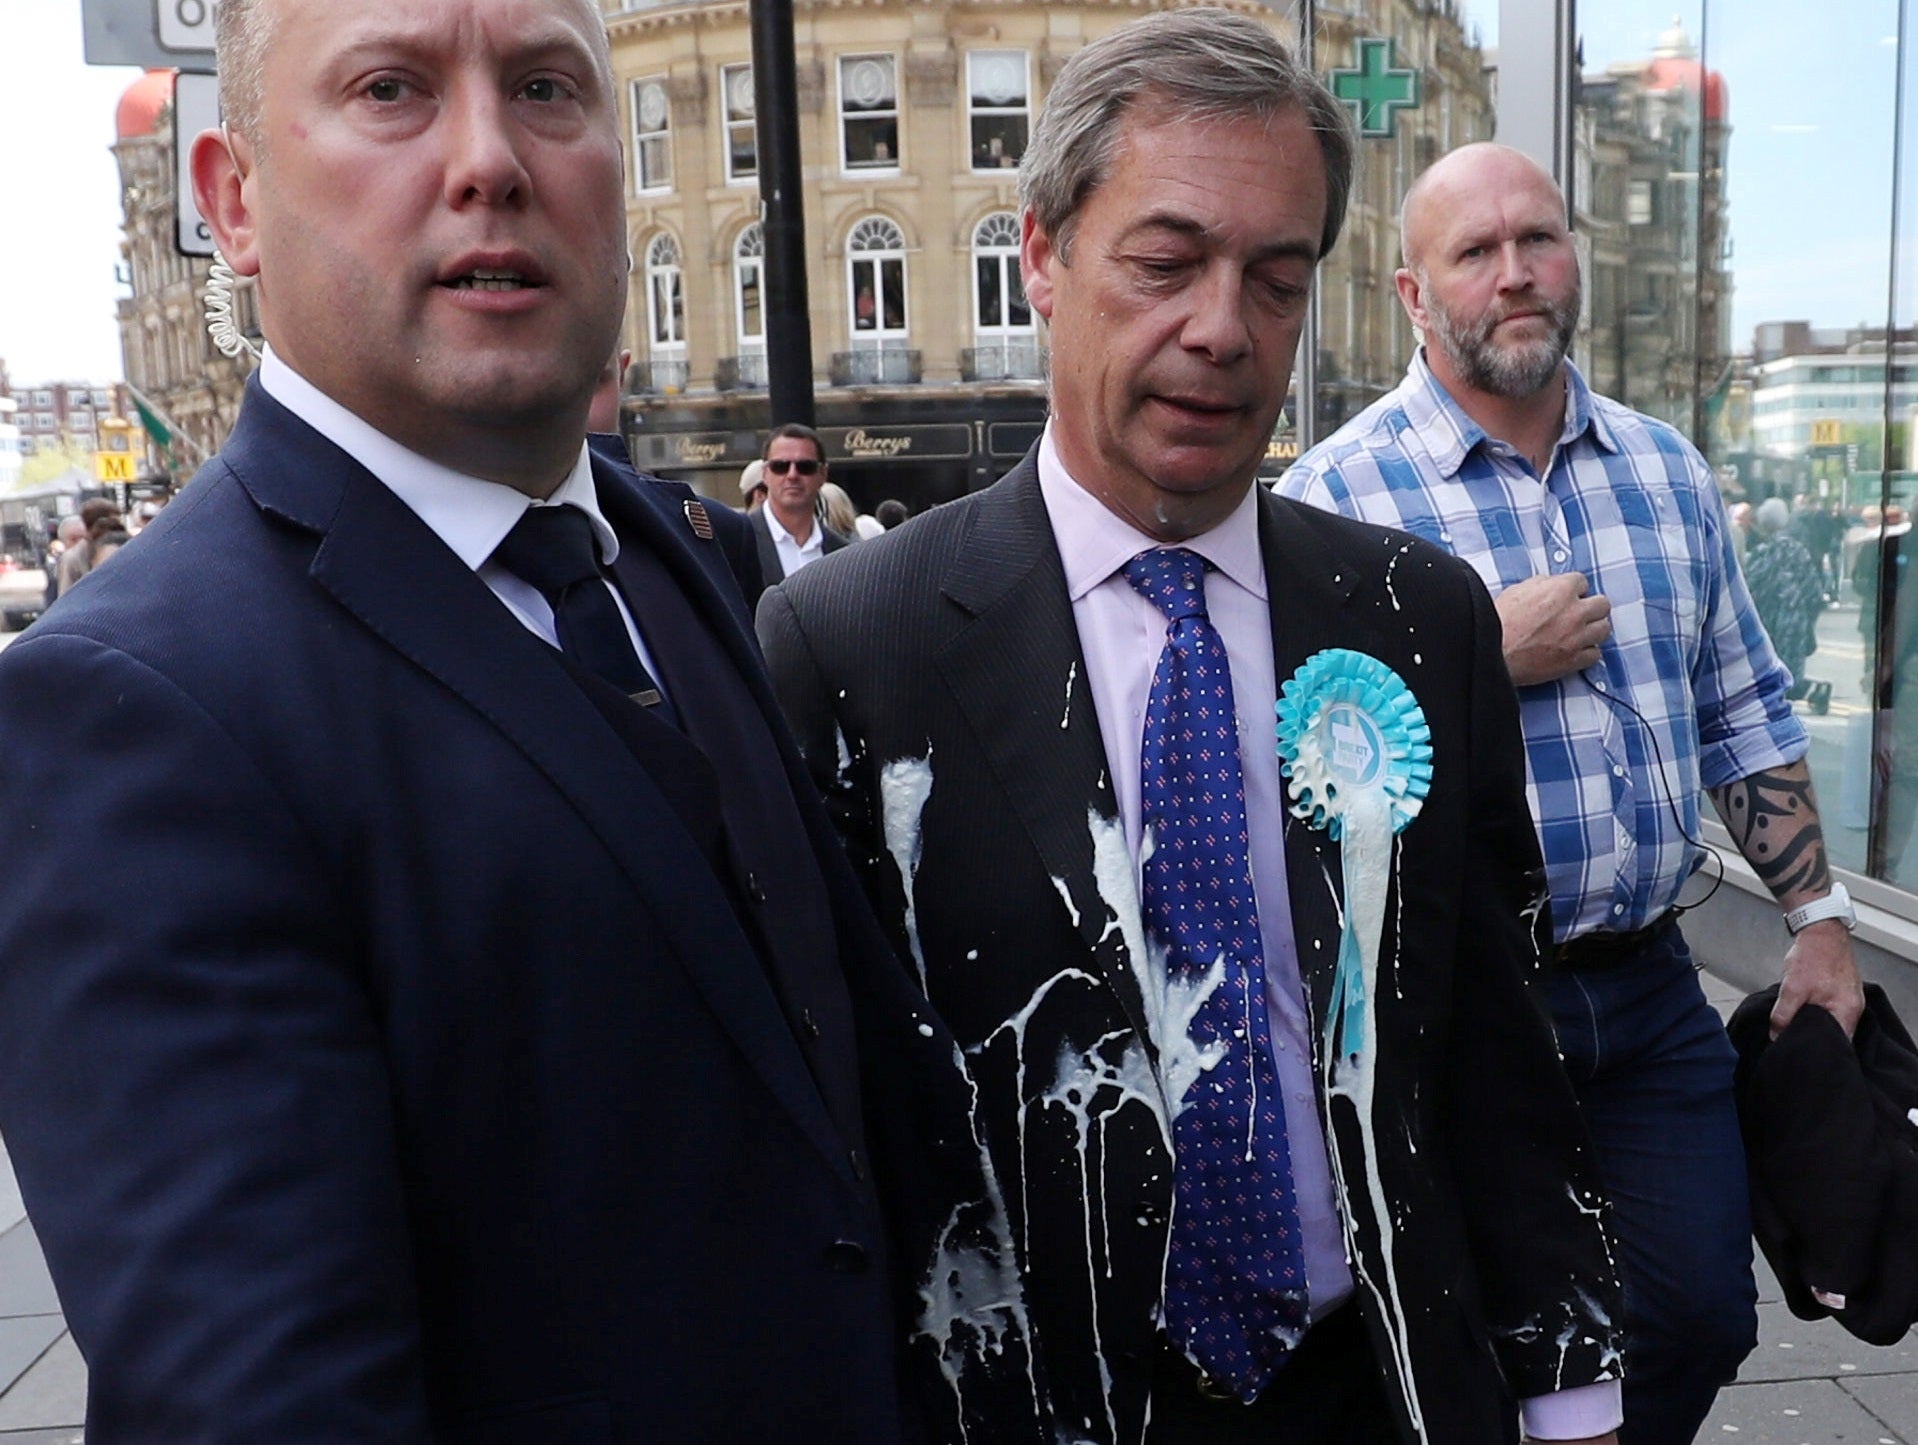 Nigel Farage milkshake attack: Man spared jail after admitting assault on Brexit Party leader